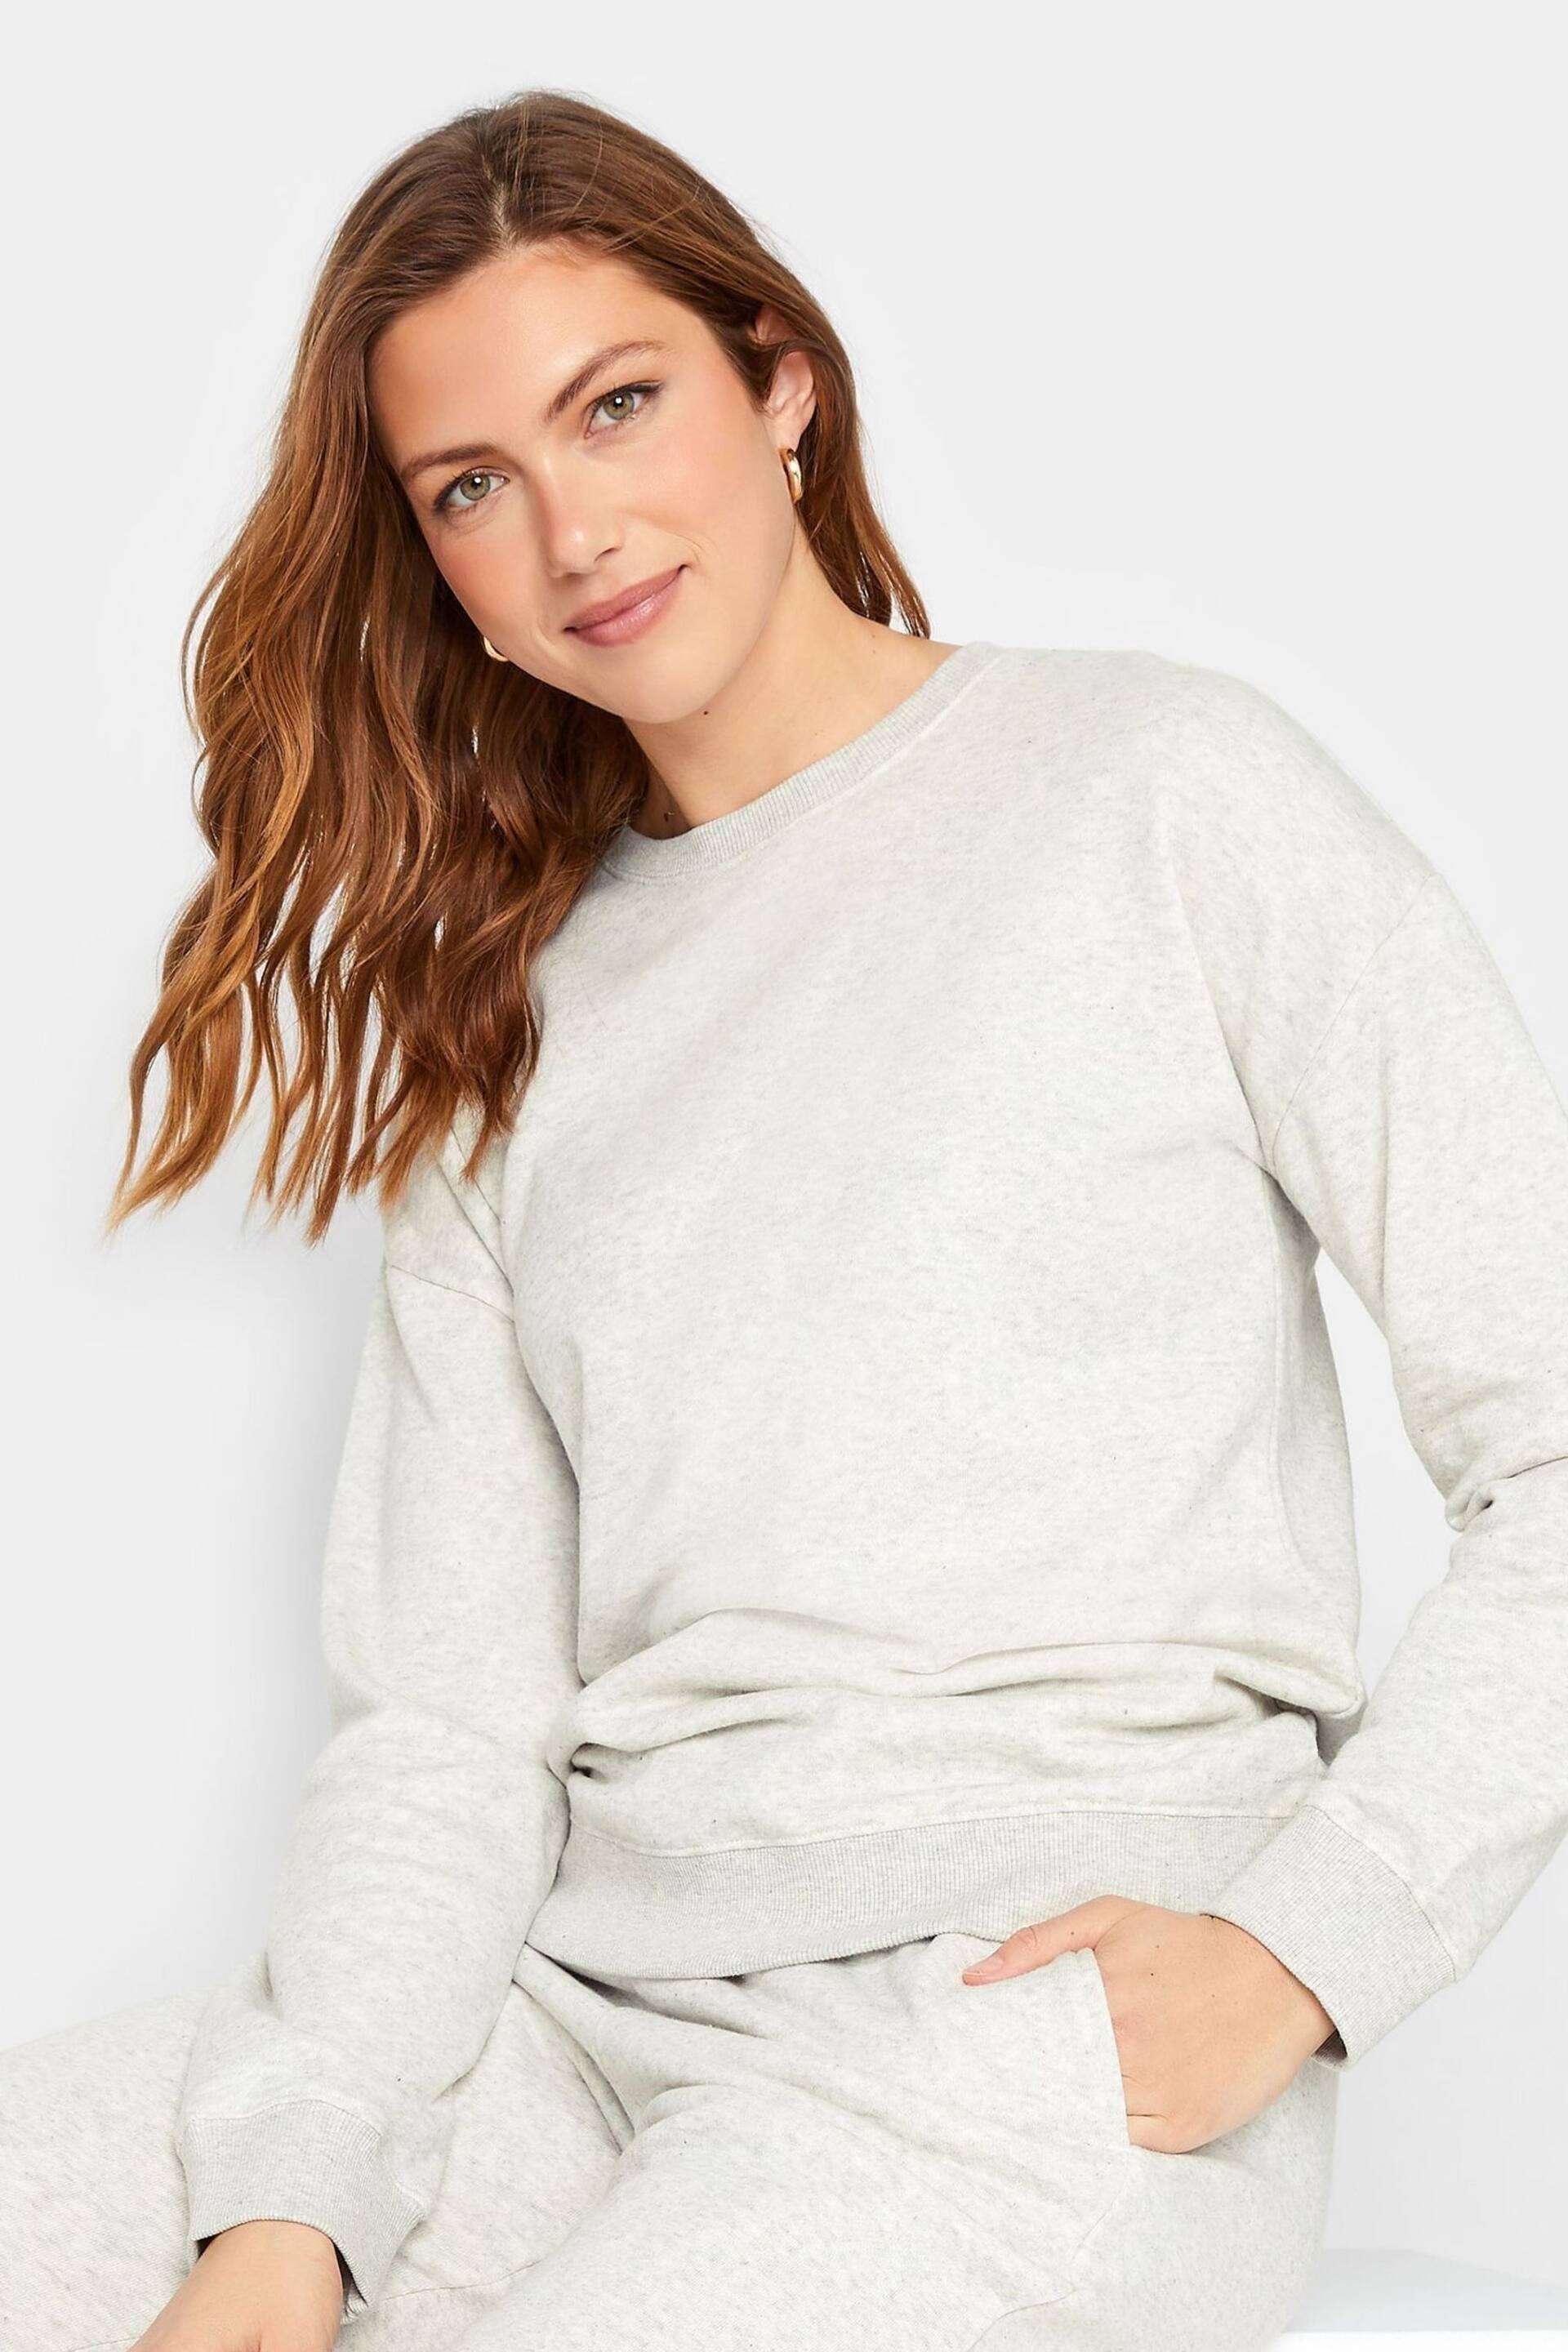 Long Tall Sally Grey Sweatshirt - Image 5 of 5